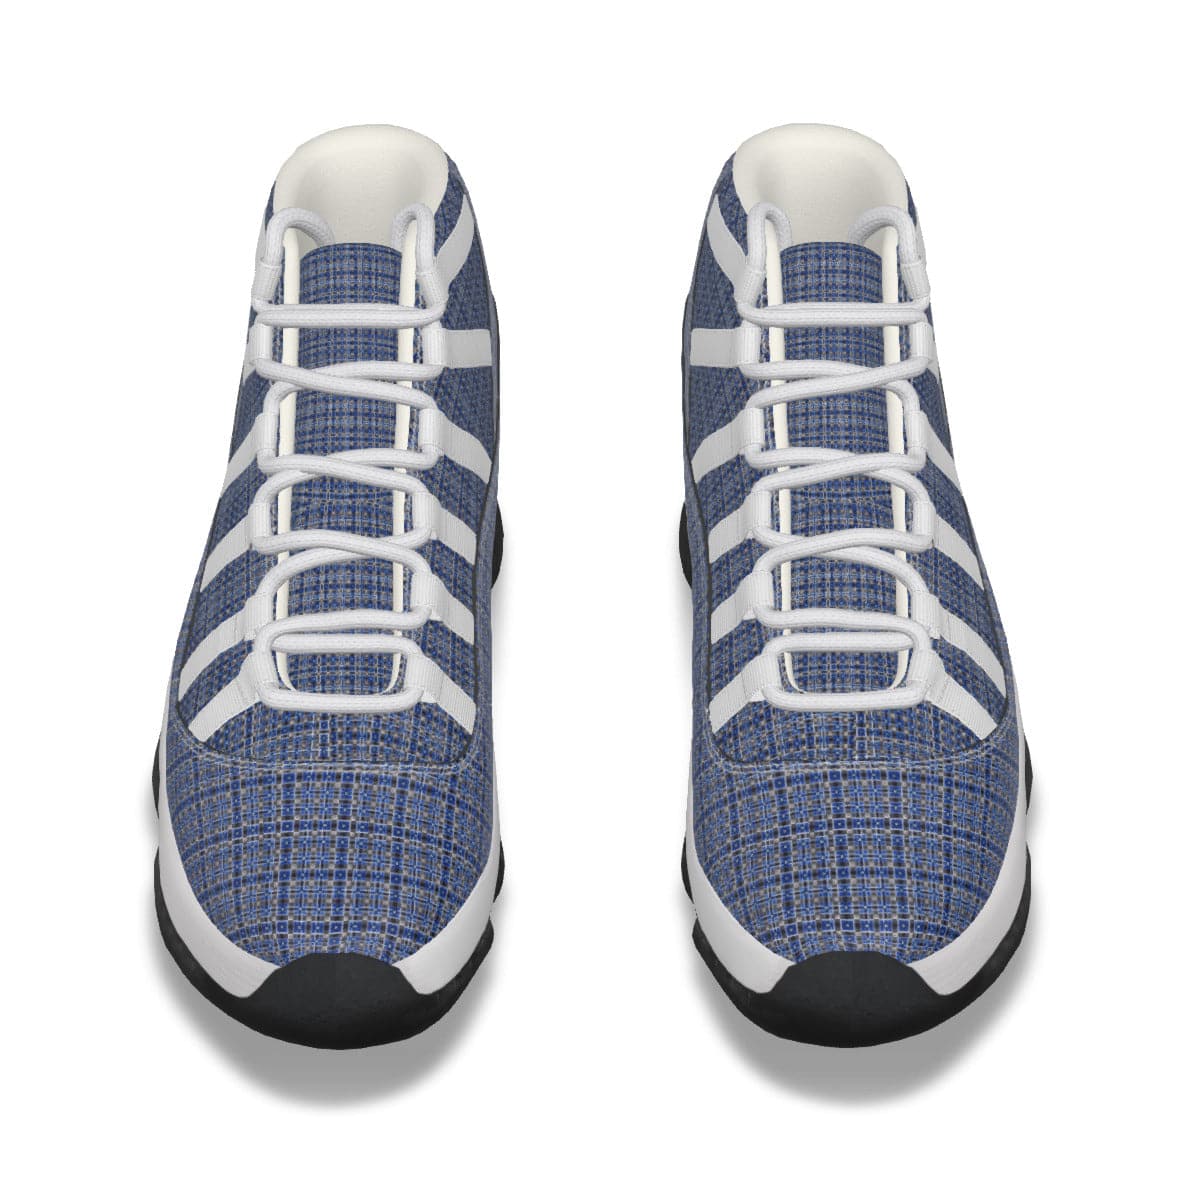 Sophisticated Dark Blue Patterned Men's High Top Basketball Shoe by Sensus Studio Design